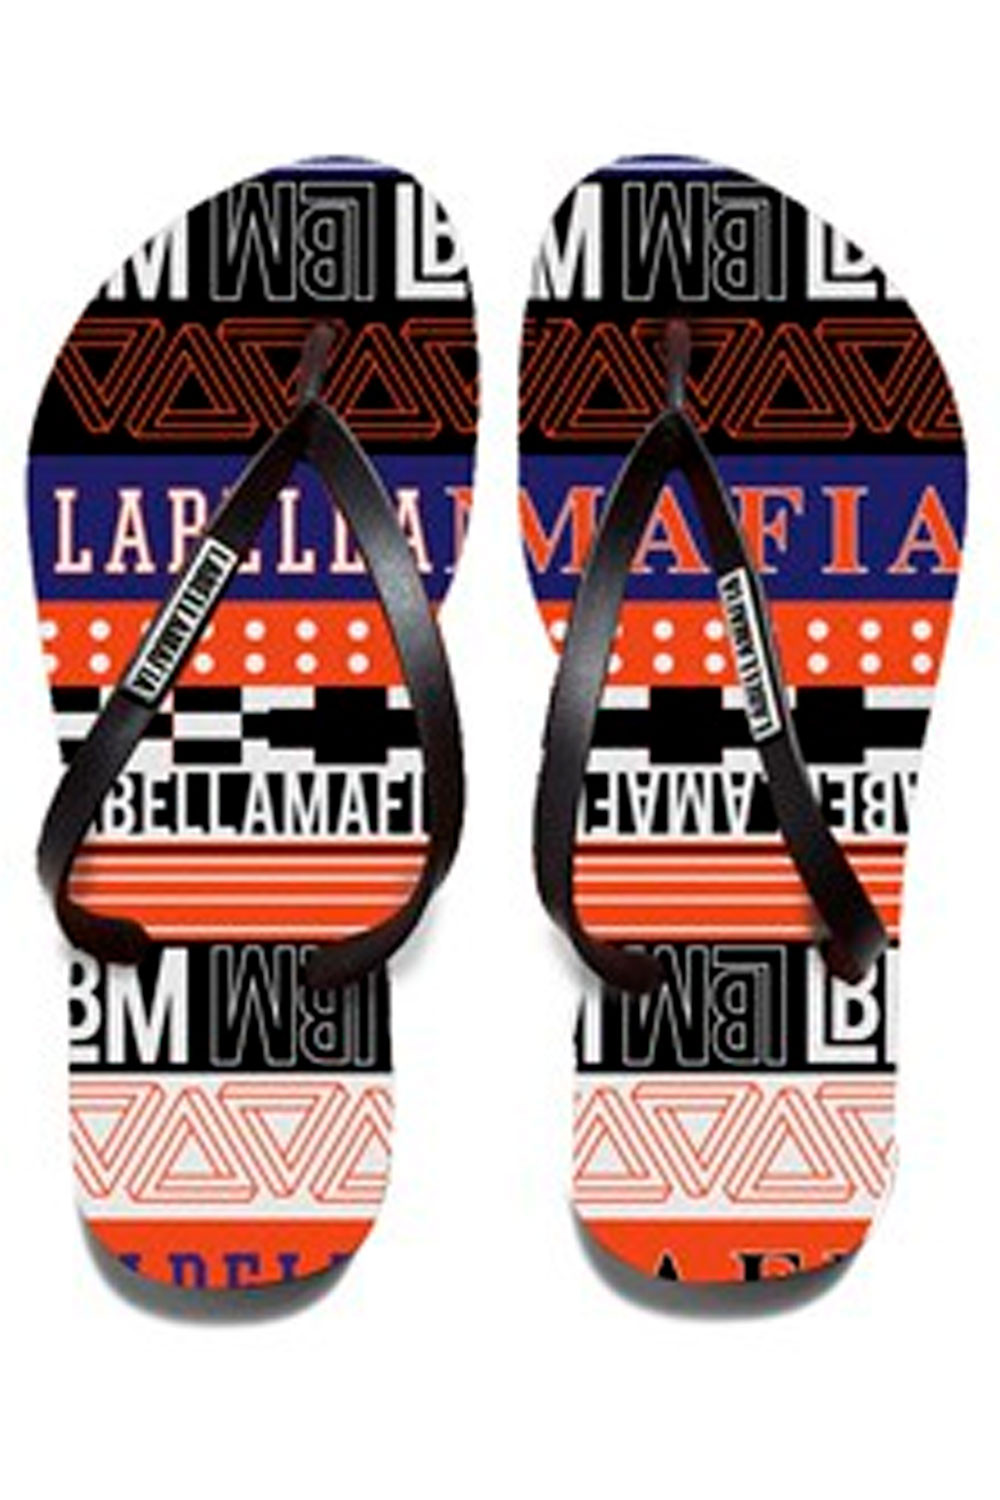 LabellaMafia Orange and Black Printed Flip Flop Slipper